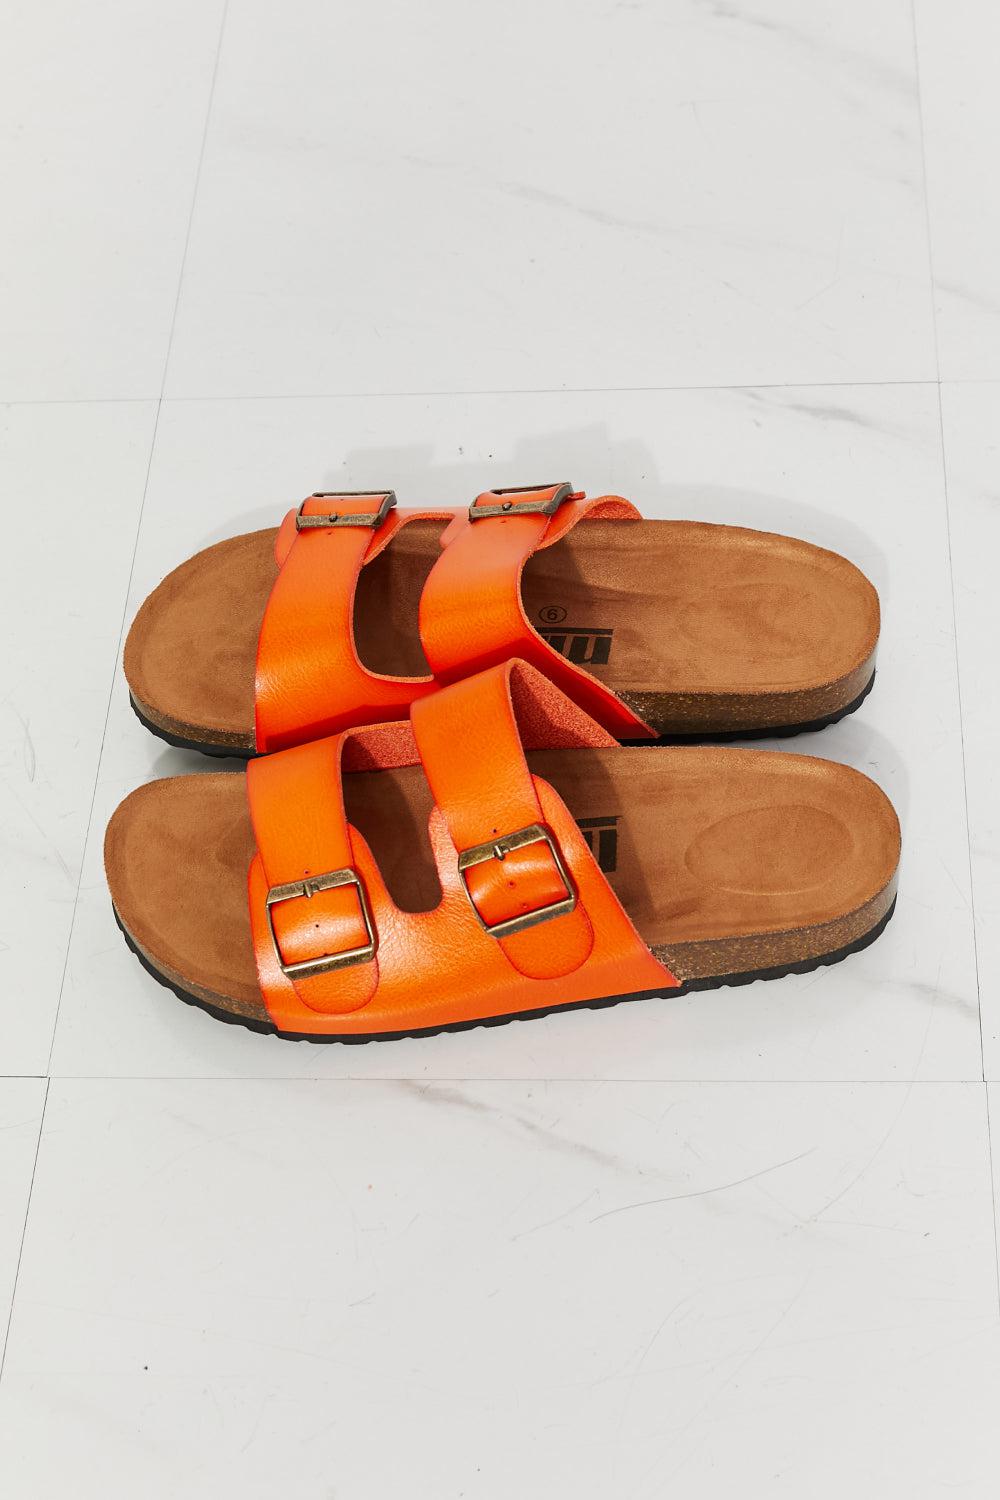 MMShoes Feeling Alive Double Banded Slide Sandals in Orange BLUE ZONE PLANET